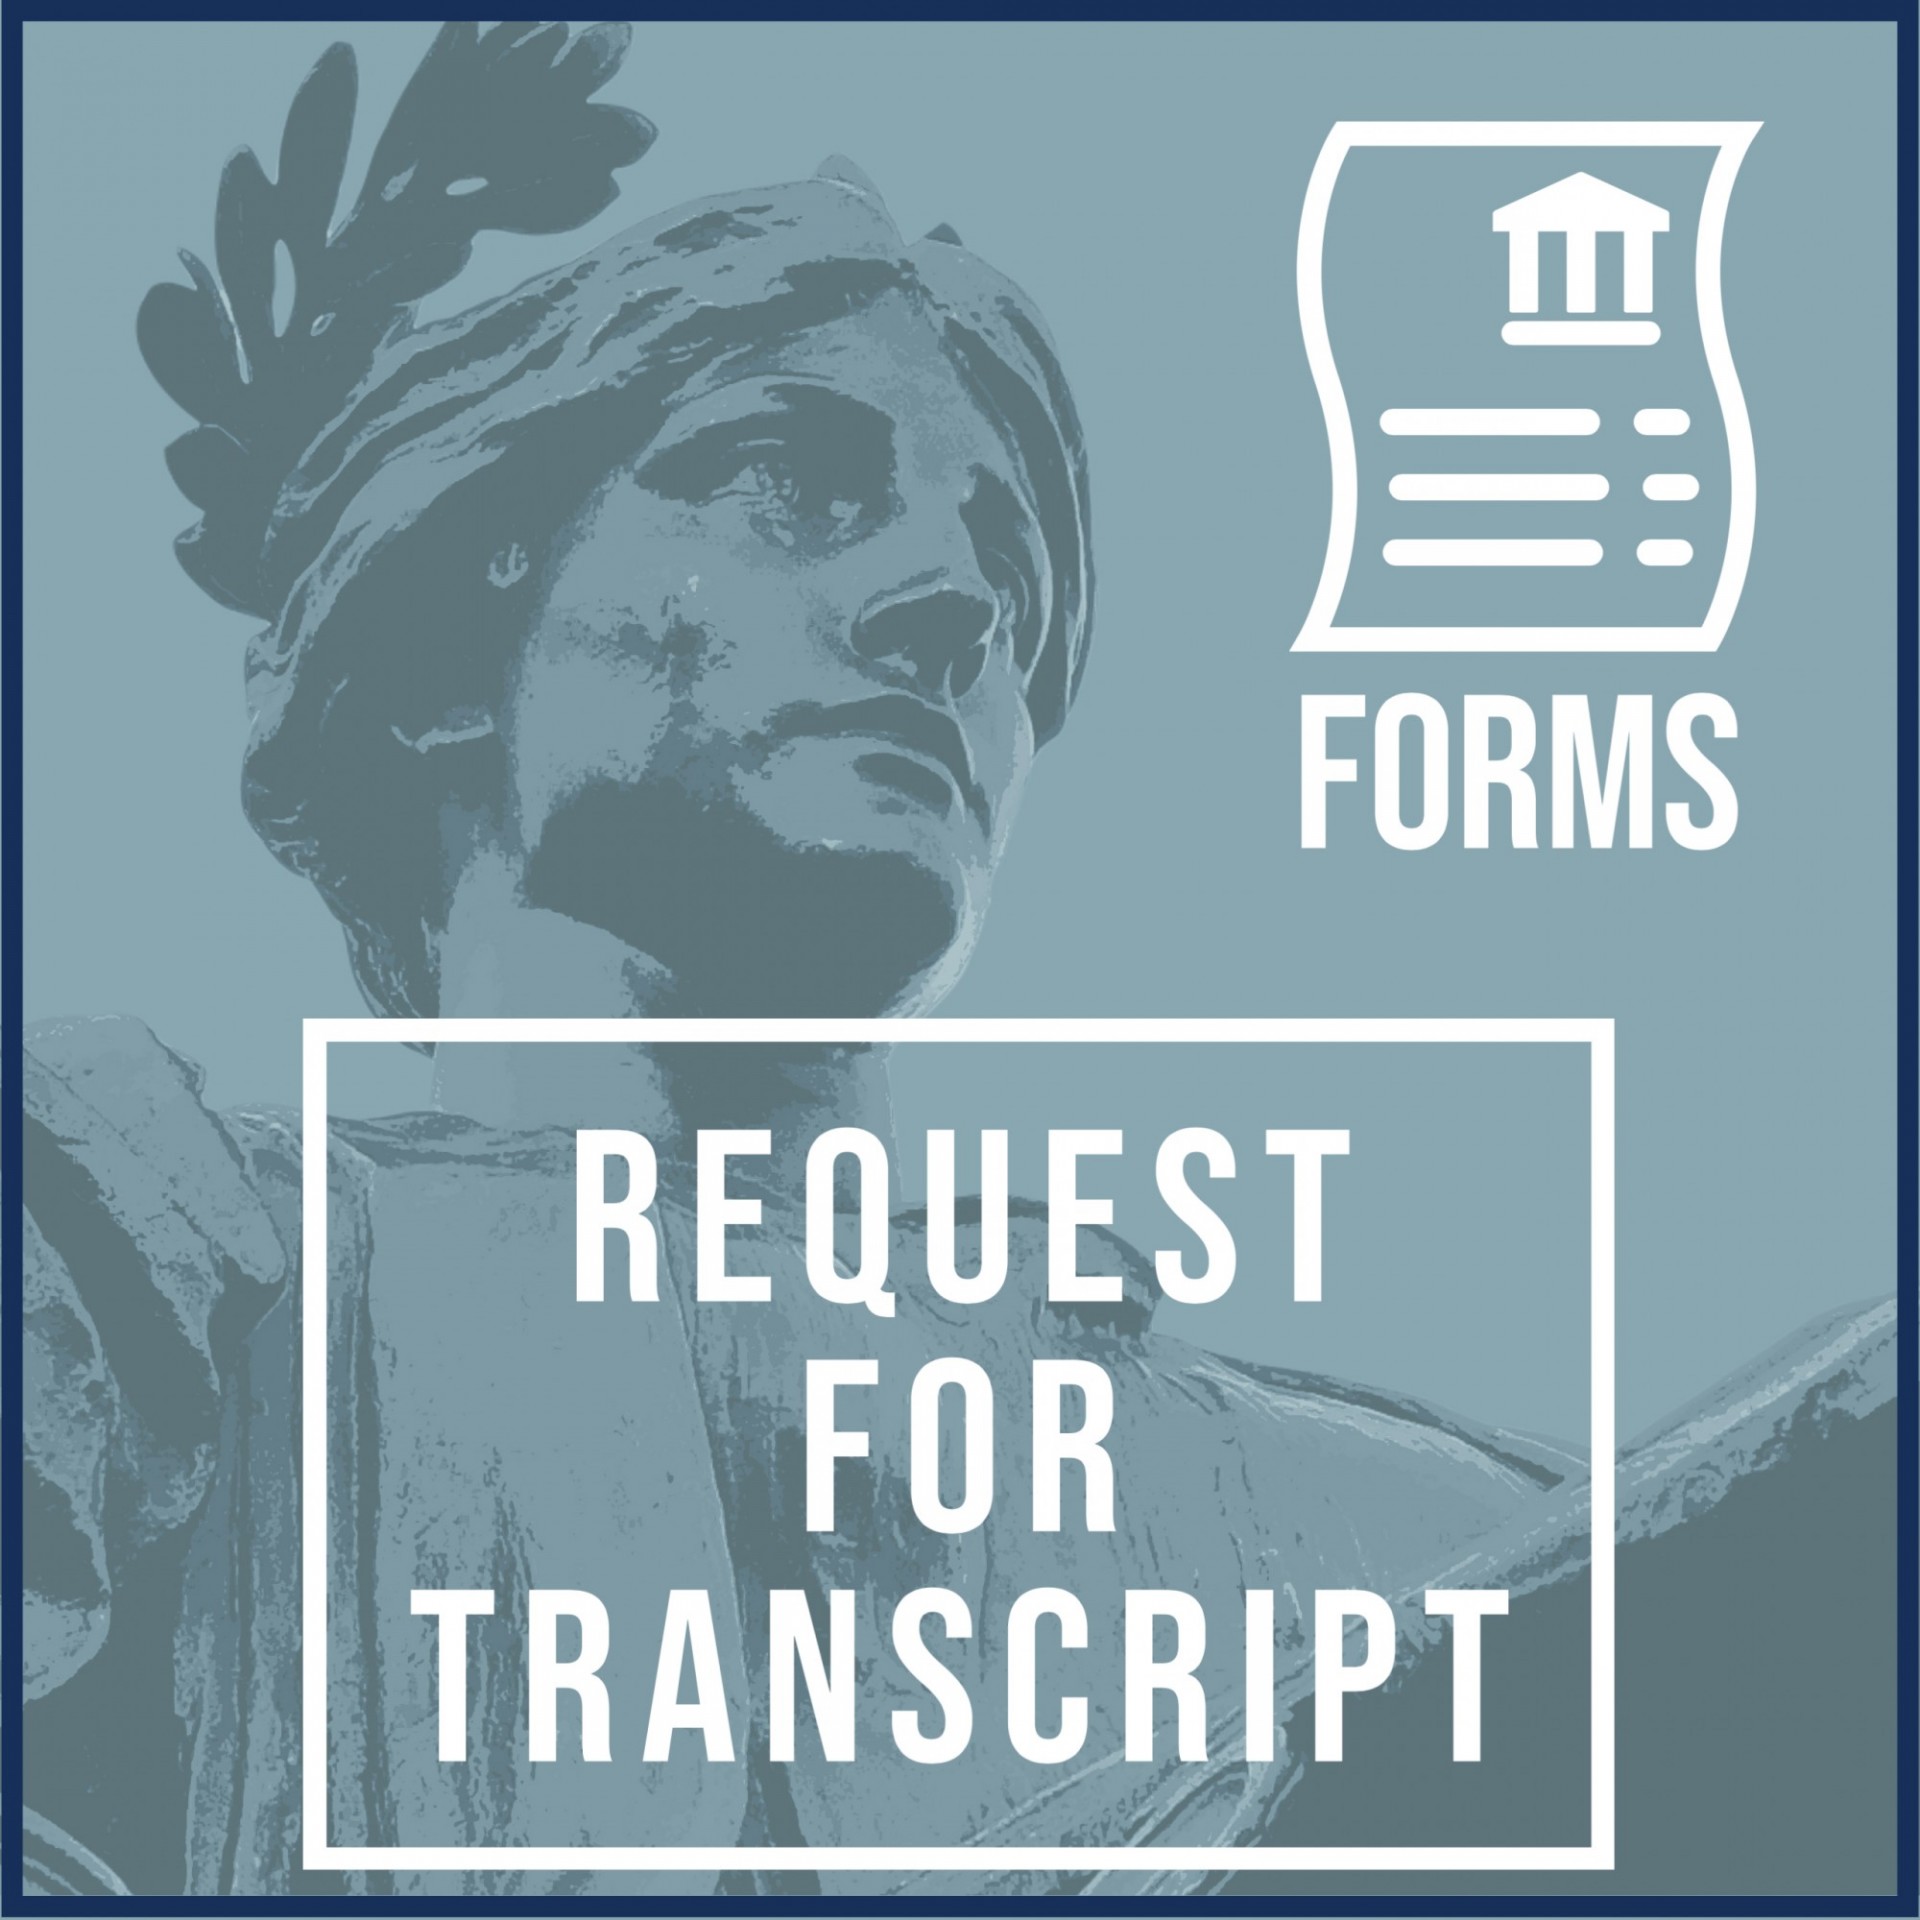 FORMS ICON: REQUEST FOR TRANSCRIPT